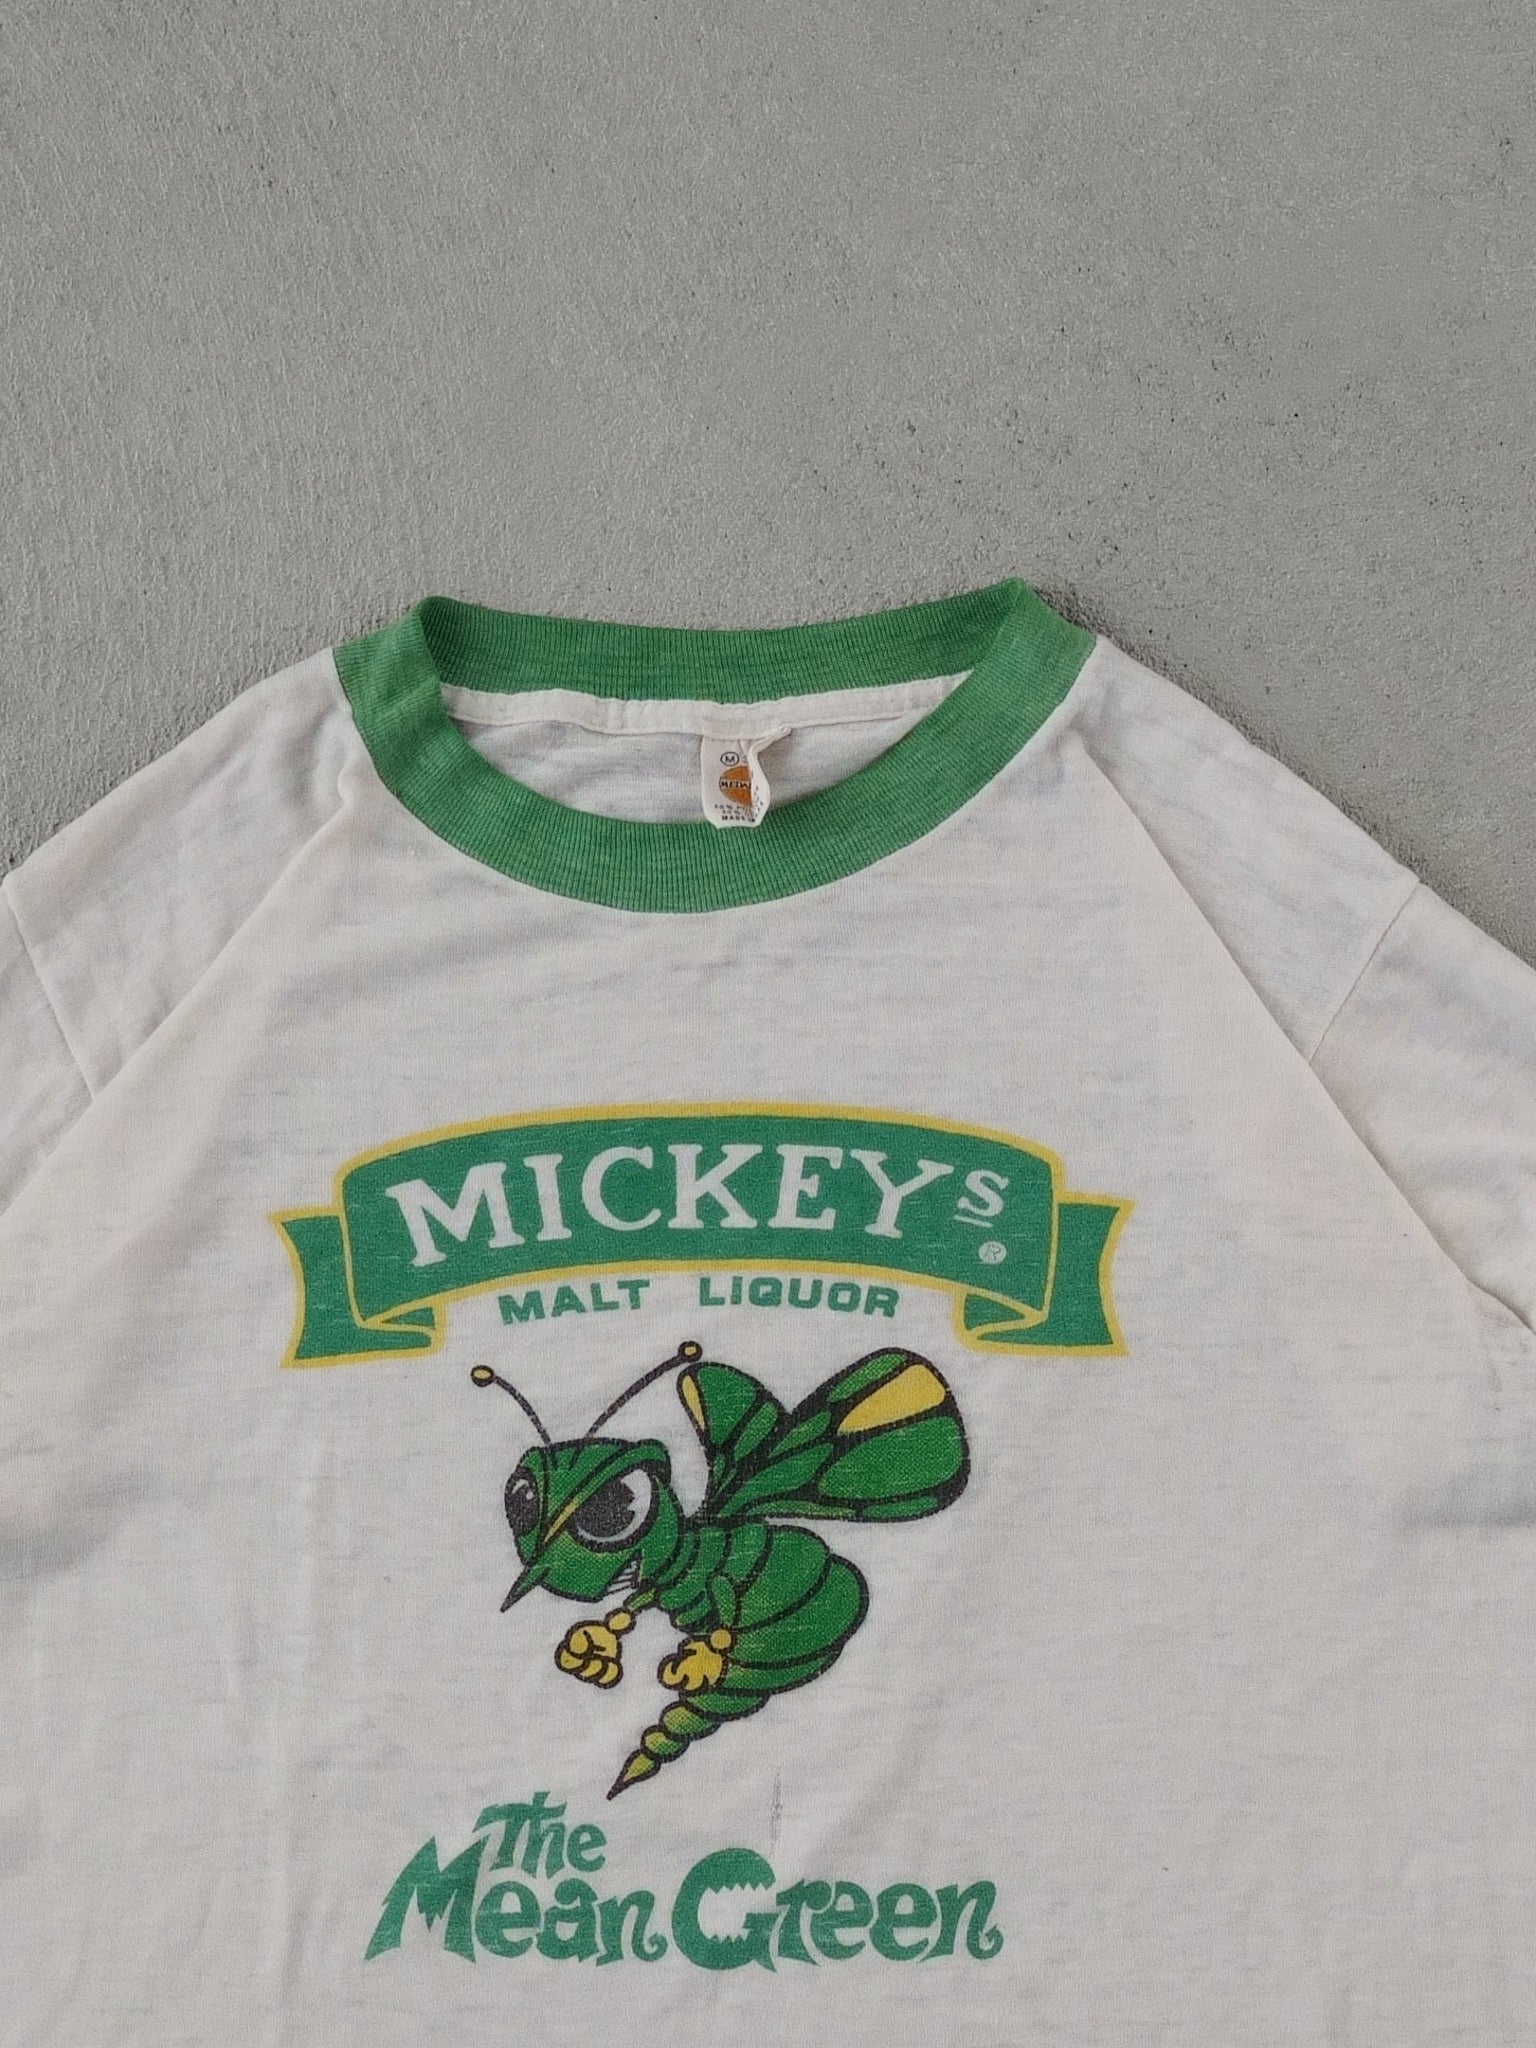 Vintage 90s White Mickey's Mean Green Malt Liquor Graphic Tee ()